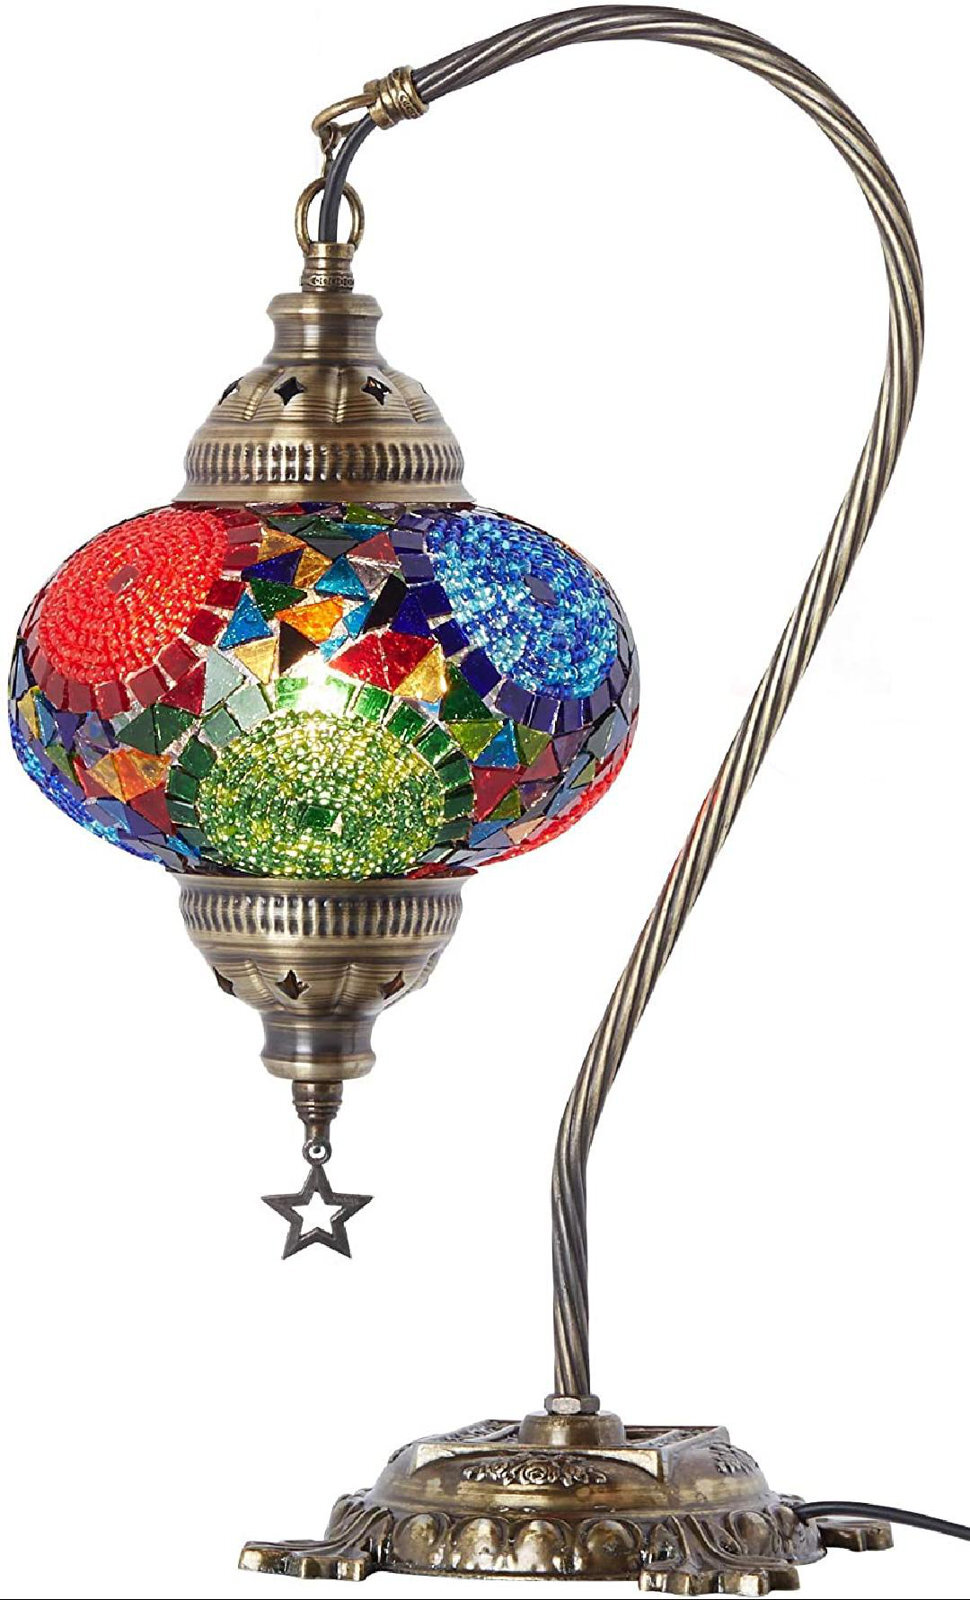 Turkish Moroccan Mosaic Table Lamp With US Plug & Socket, Swan Neck Handmade Desk Bedside Table Night Lamp Decorative Tiffany Lamp Light, Antique